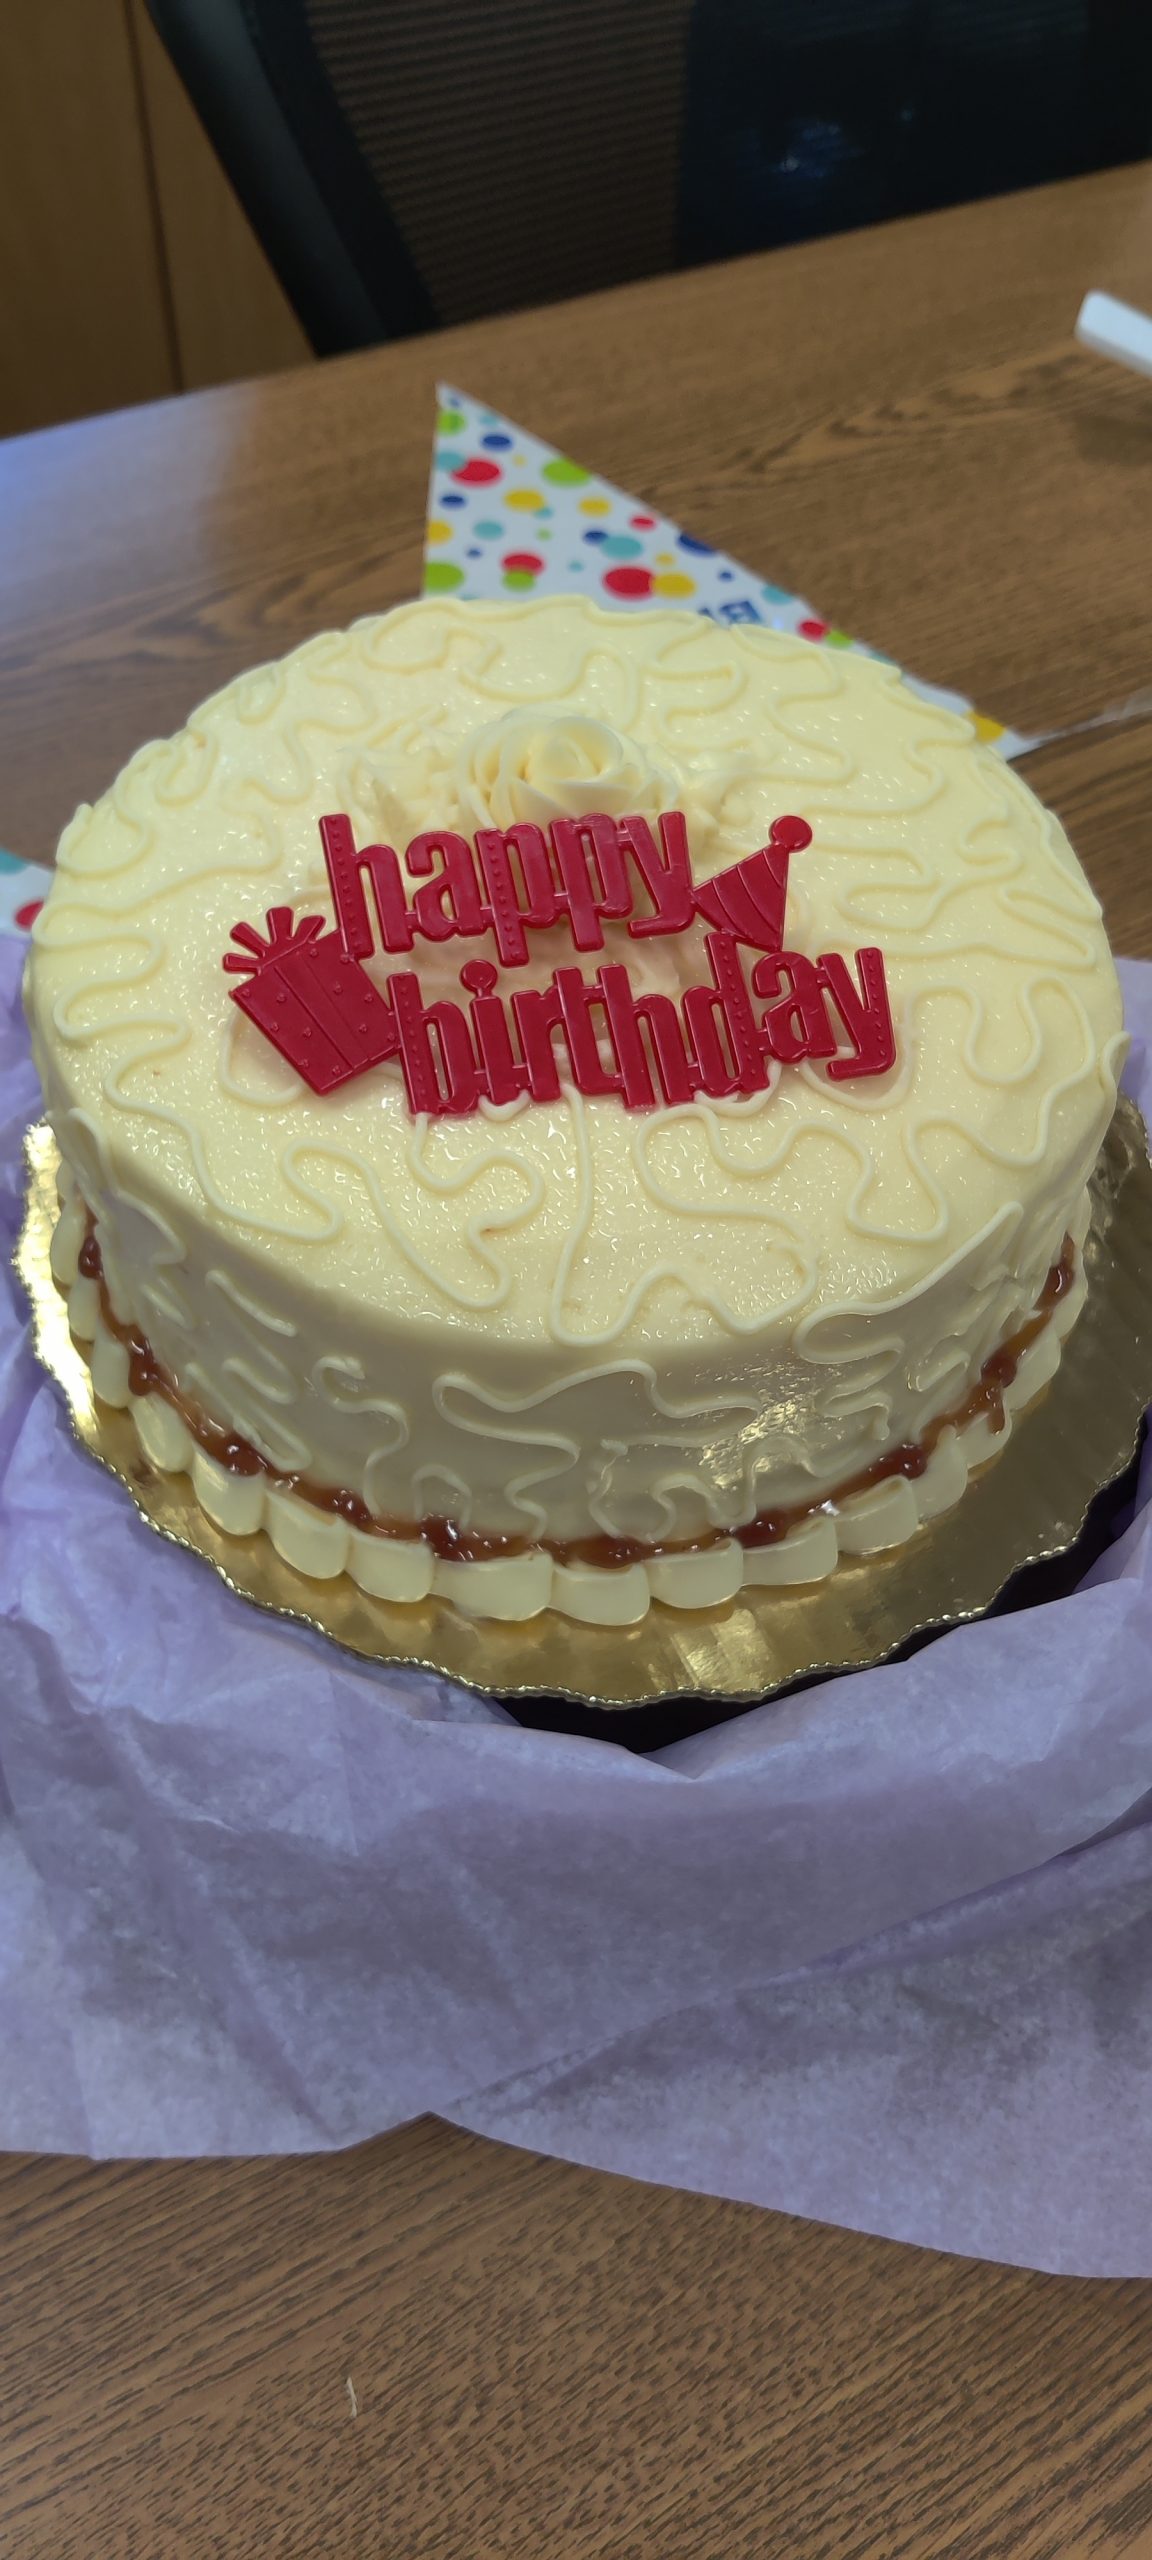 11-01-2022 Liz Olsen's Birthday Cake